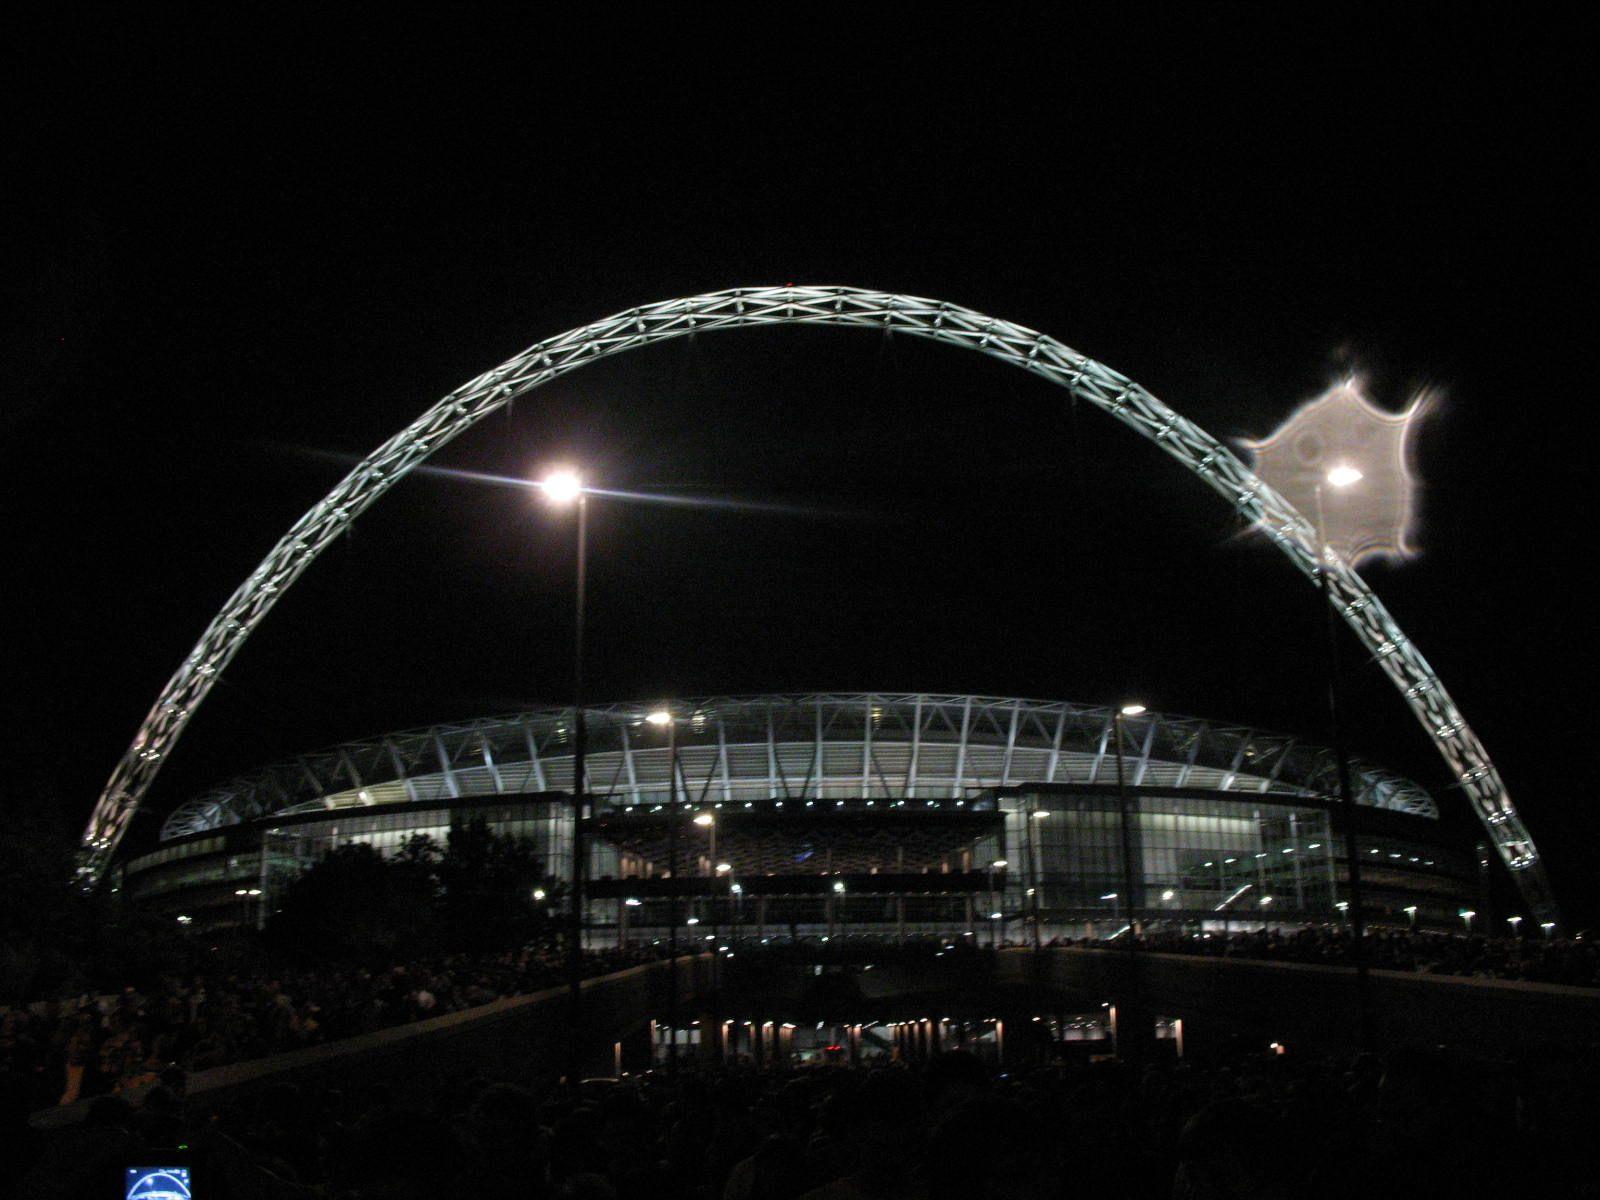 Wallpaper Grill: 10. Wembley Stadium (000)